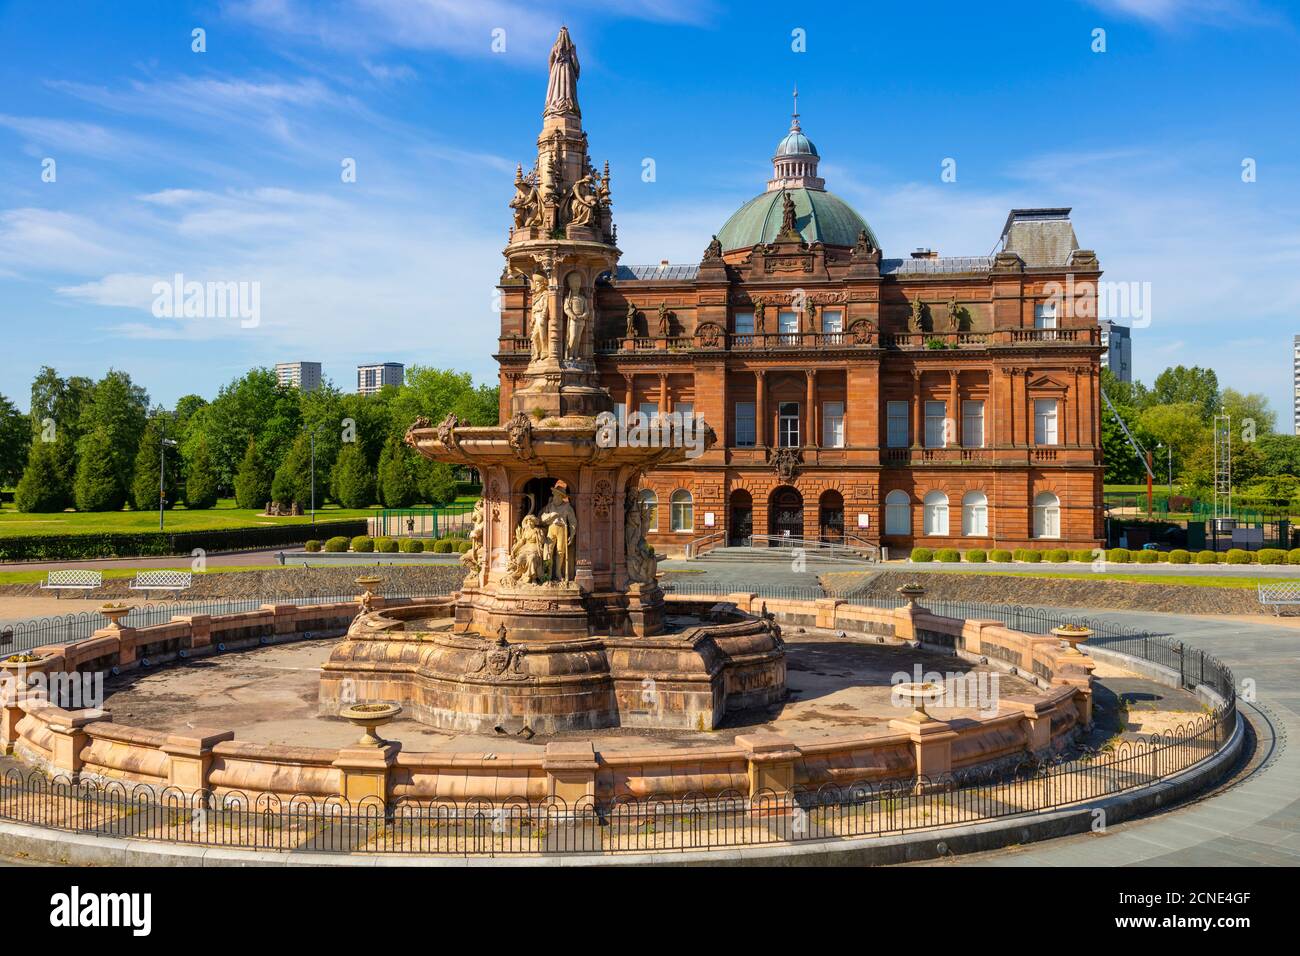 People's Palace e Doulton Fountaion, Glasgow Green, Glasgow, Scozia, Regno Unito, Europa Foto Stock